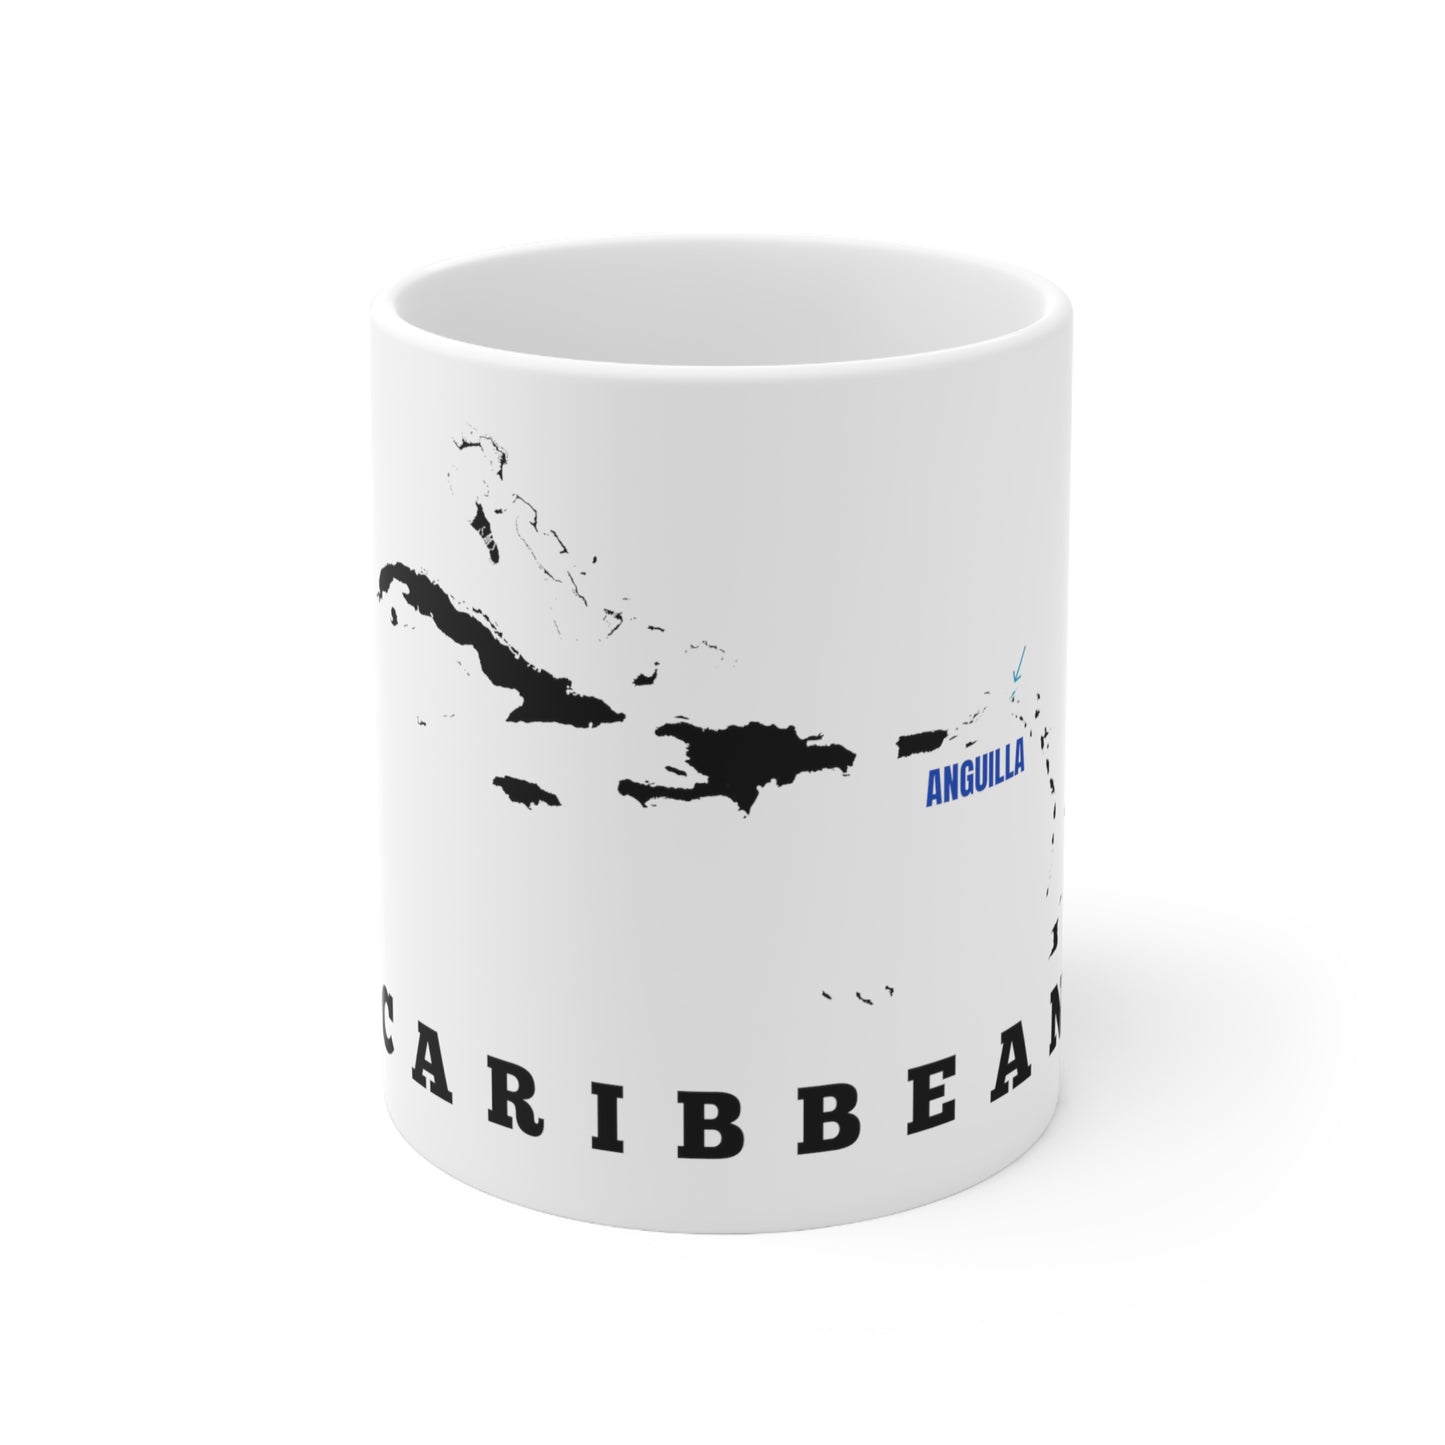 Anguilla - Caribbean Map Ceramic Mug 11oz